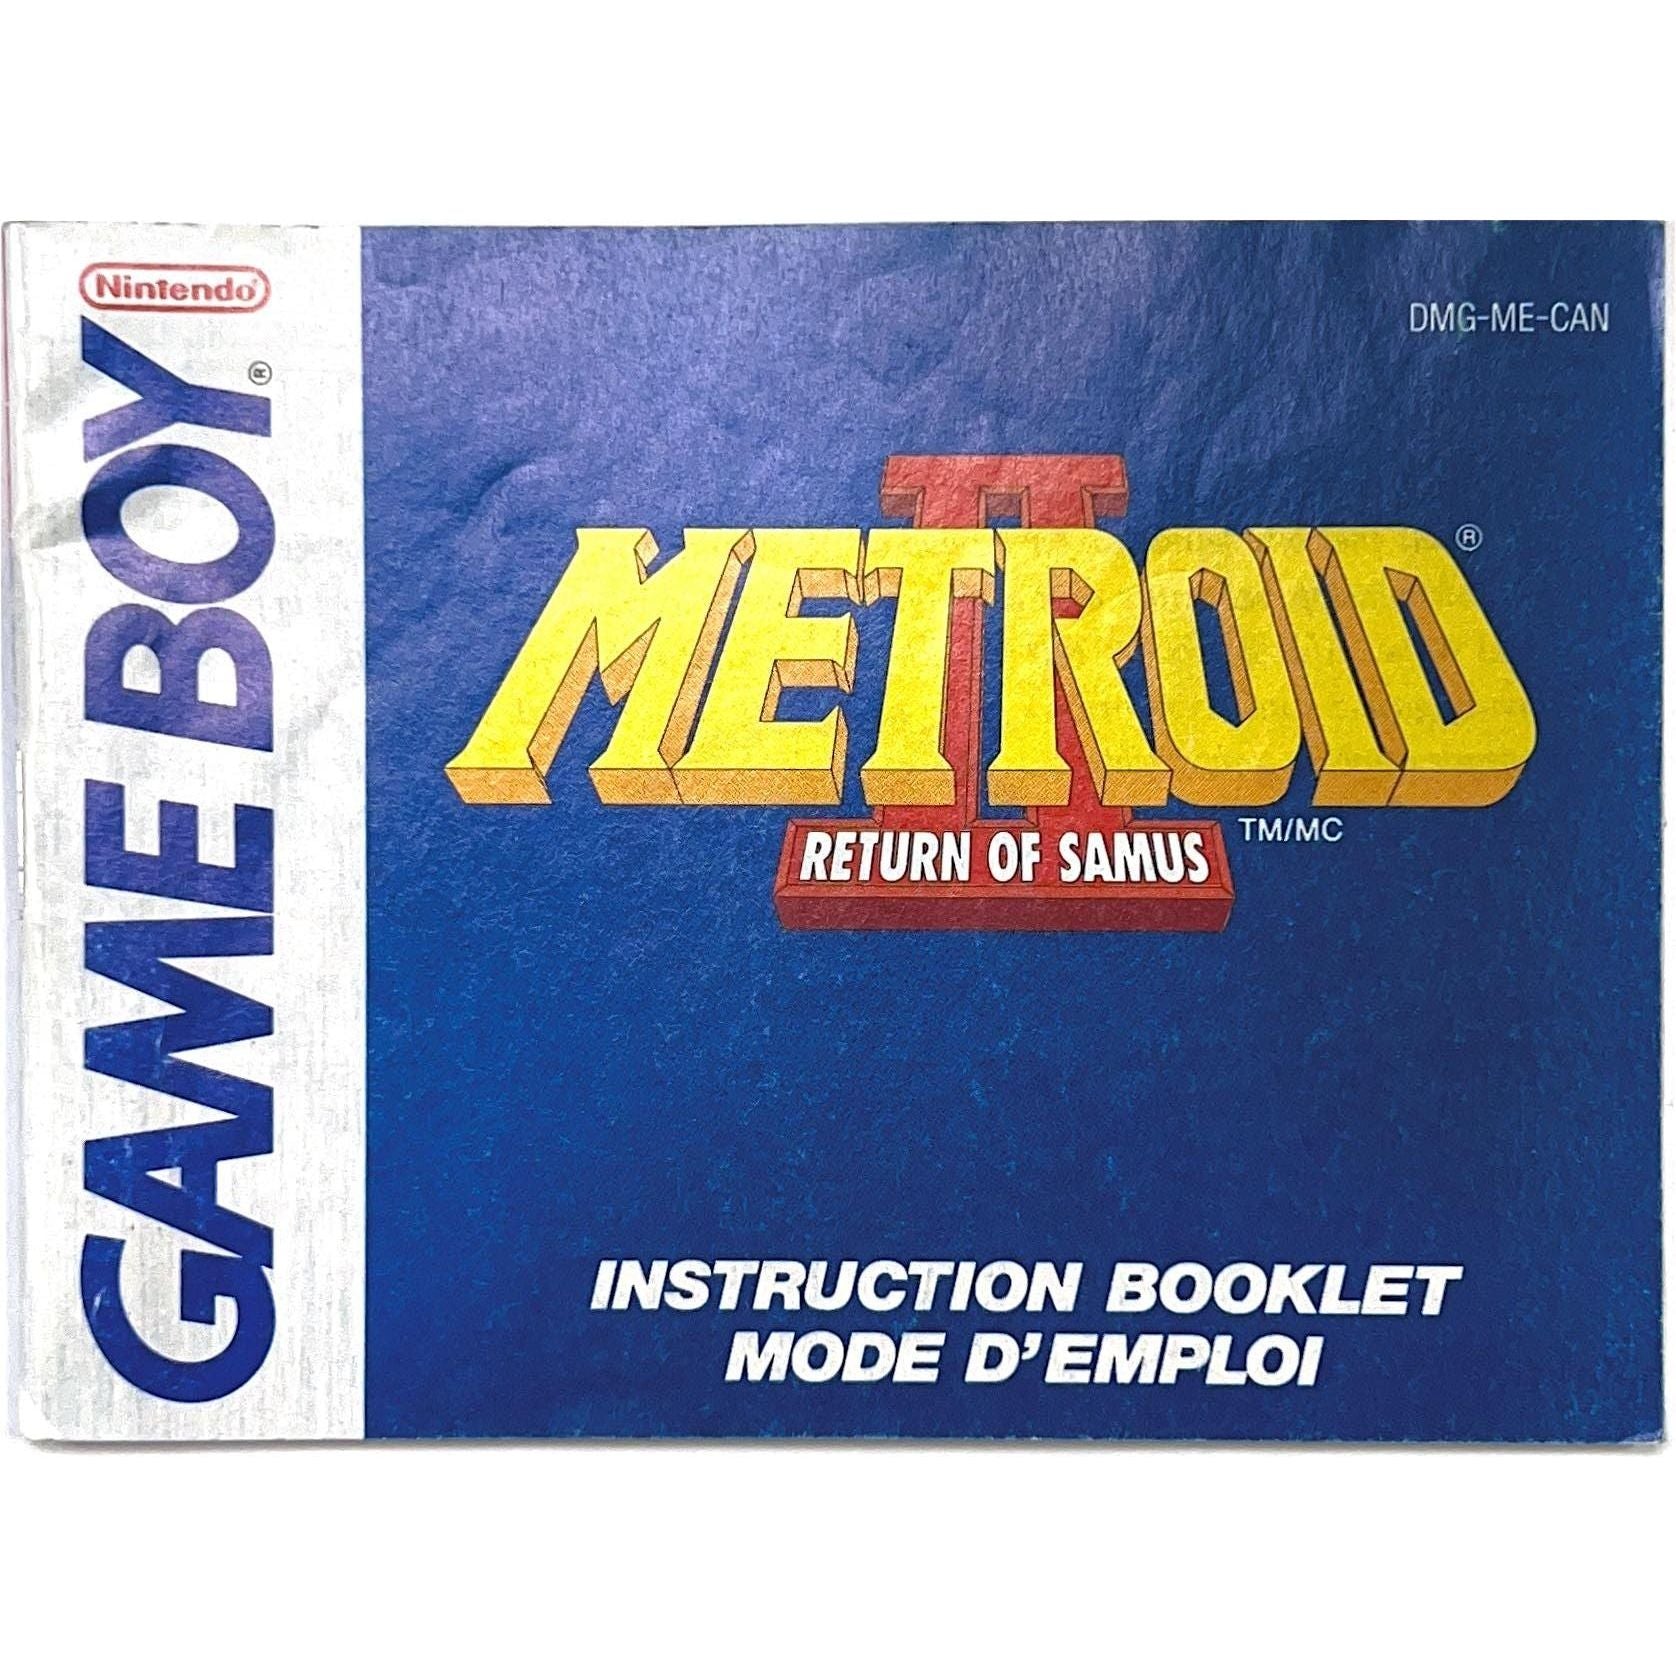 GB - Metroid II Return of Samus (Manual)